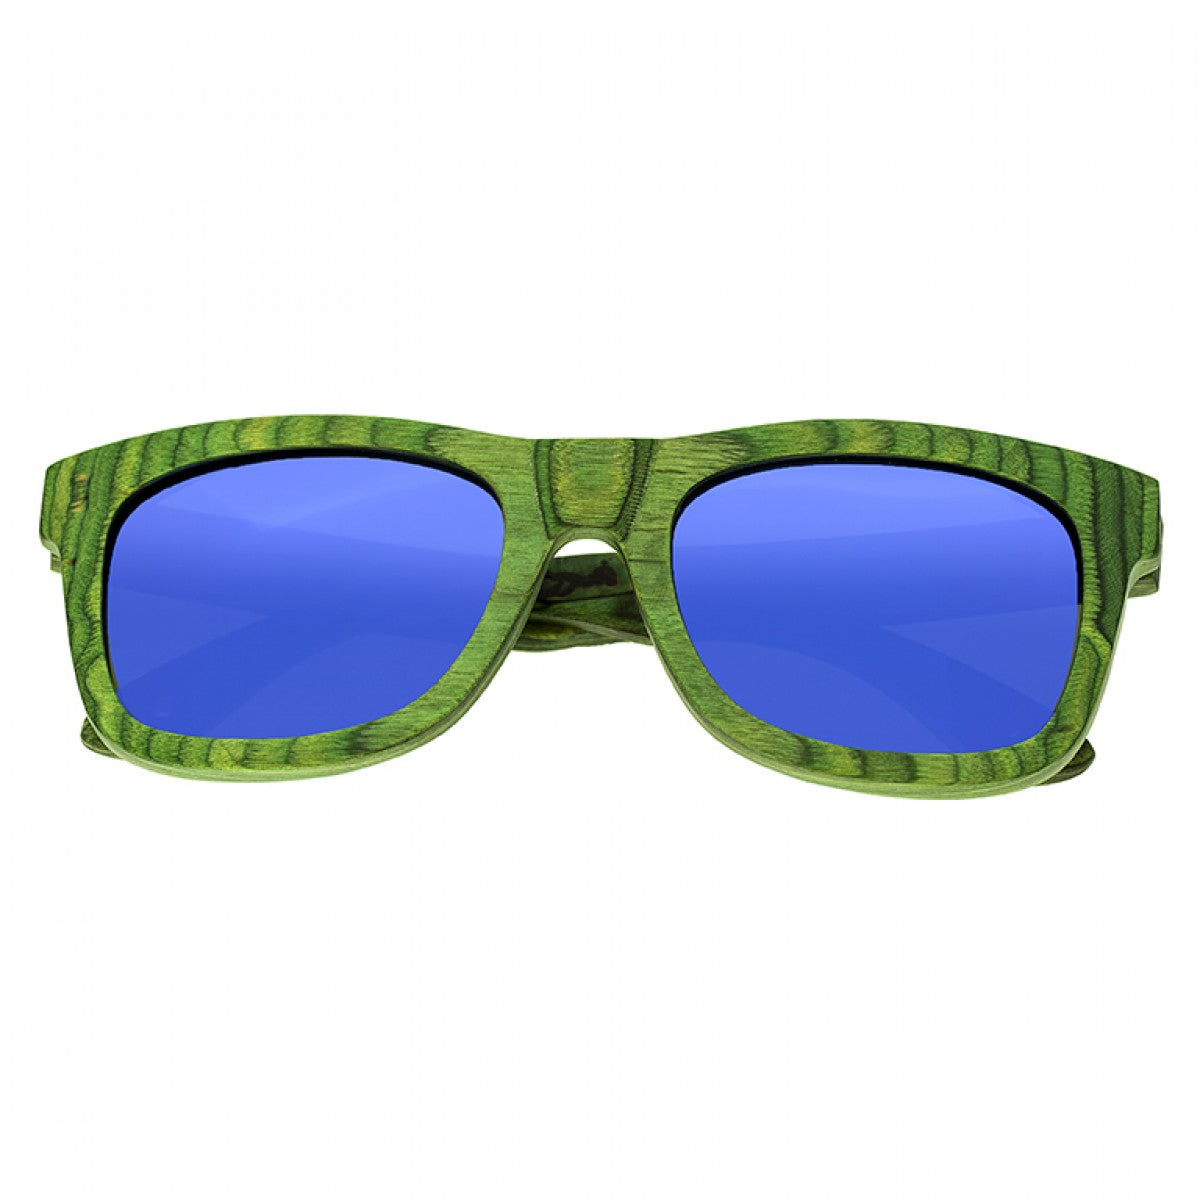 Spectrum Slater Wood Polarized Sunglasses - Green/Blue - SSGS101BL